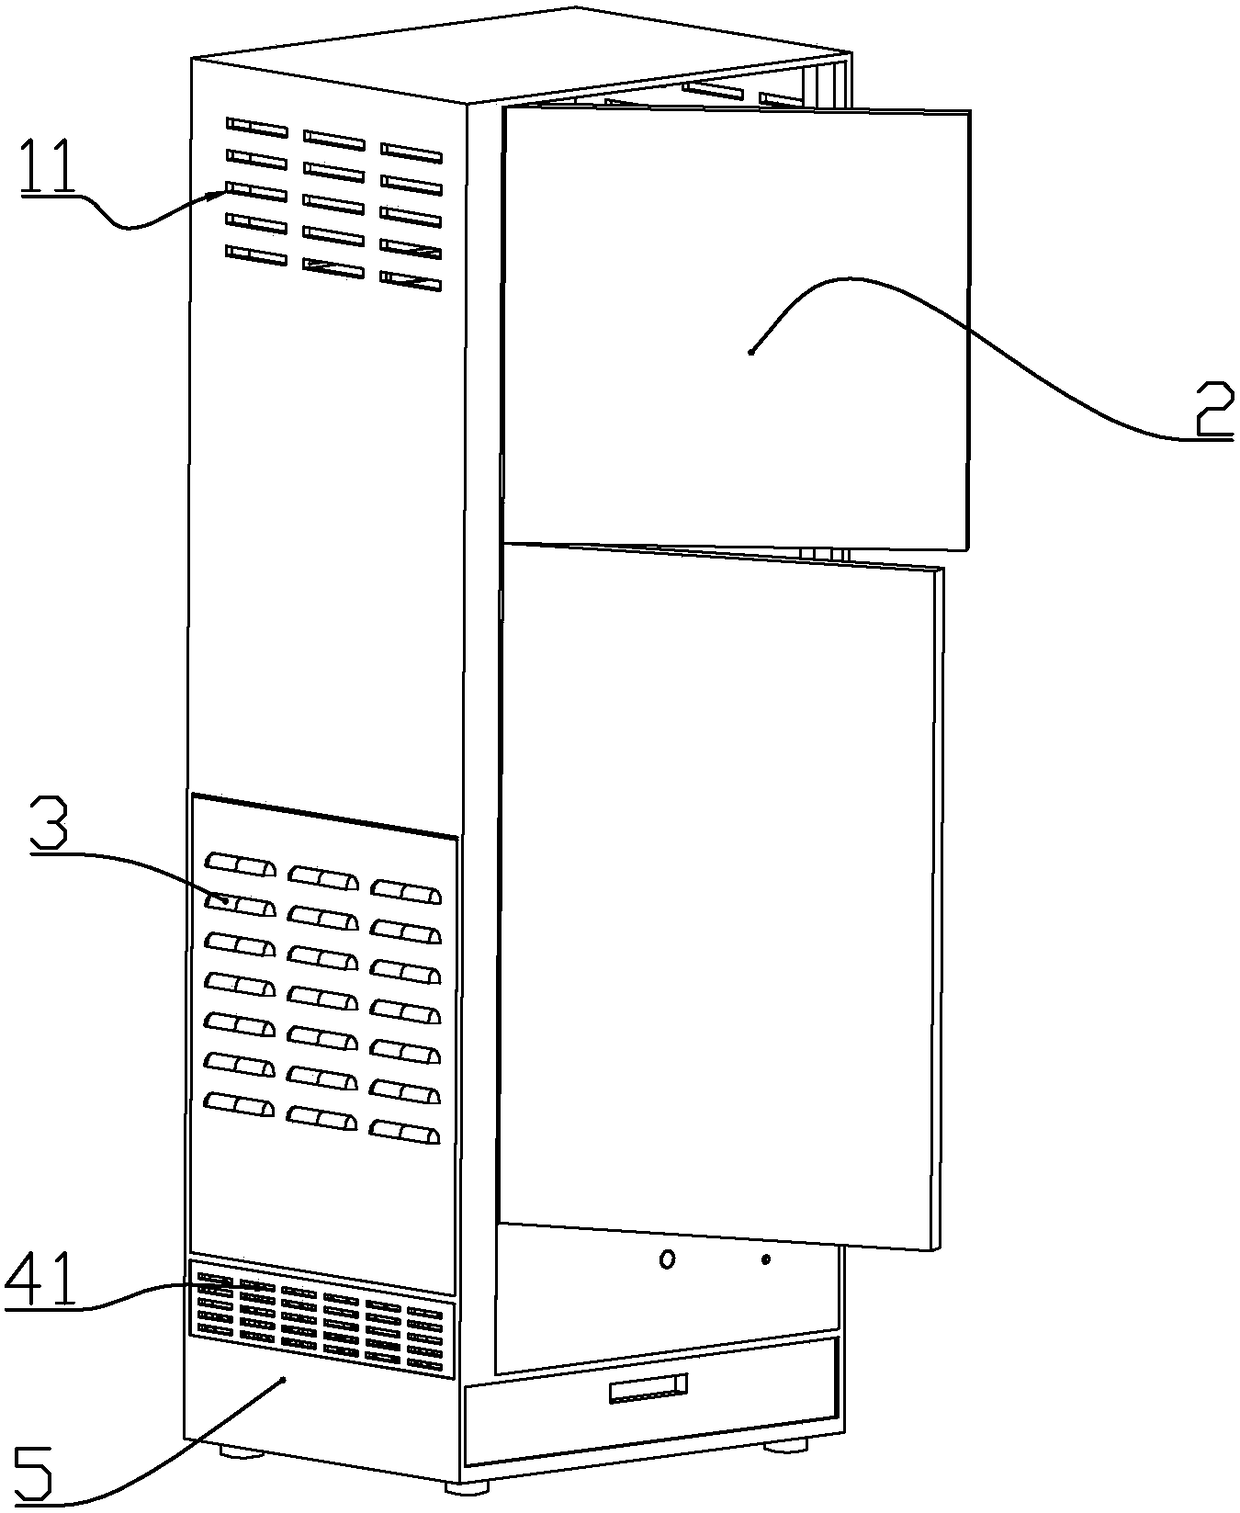 A constant temperature distribution cabinet